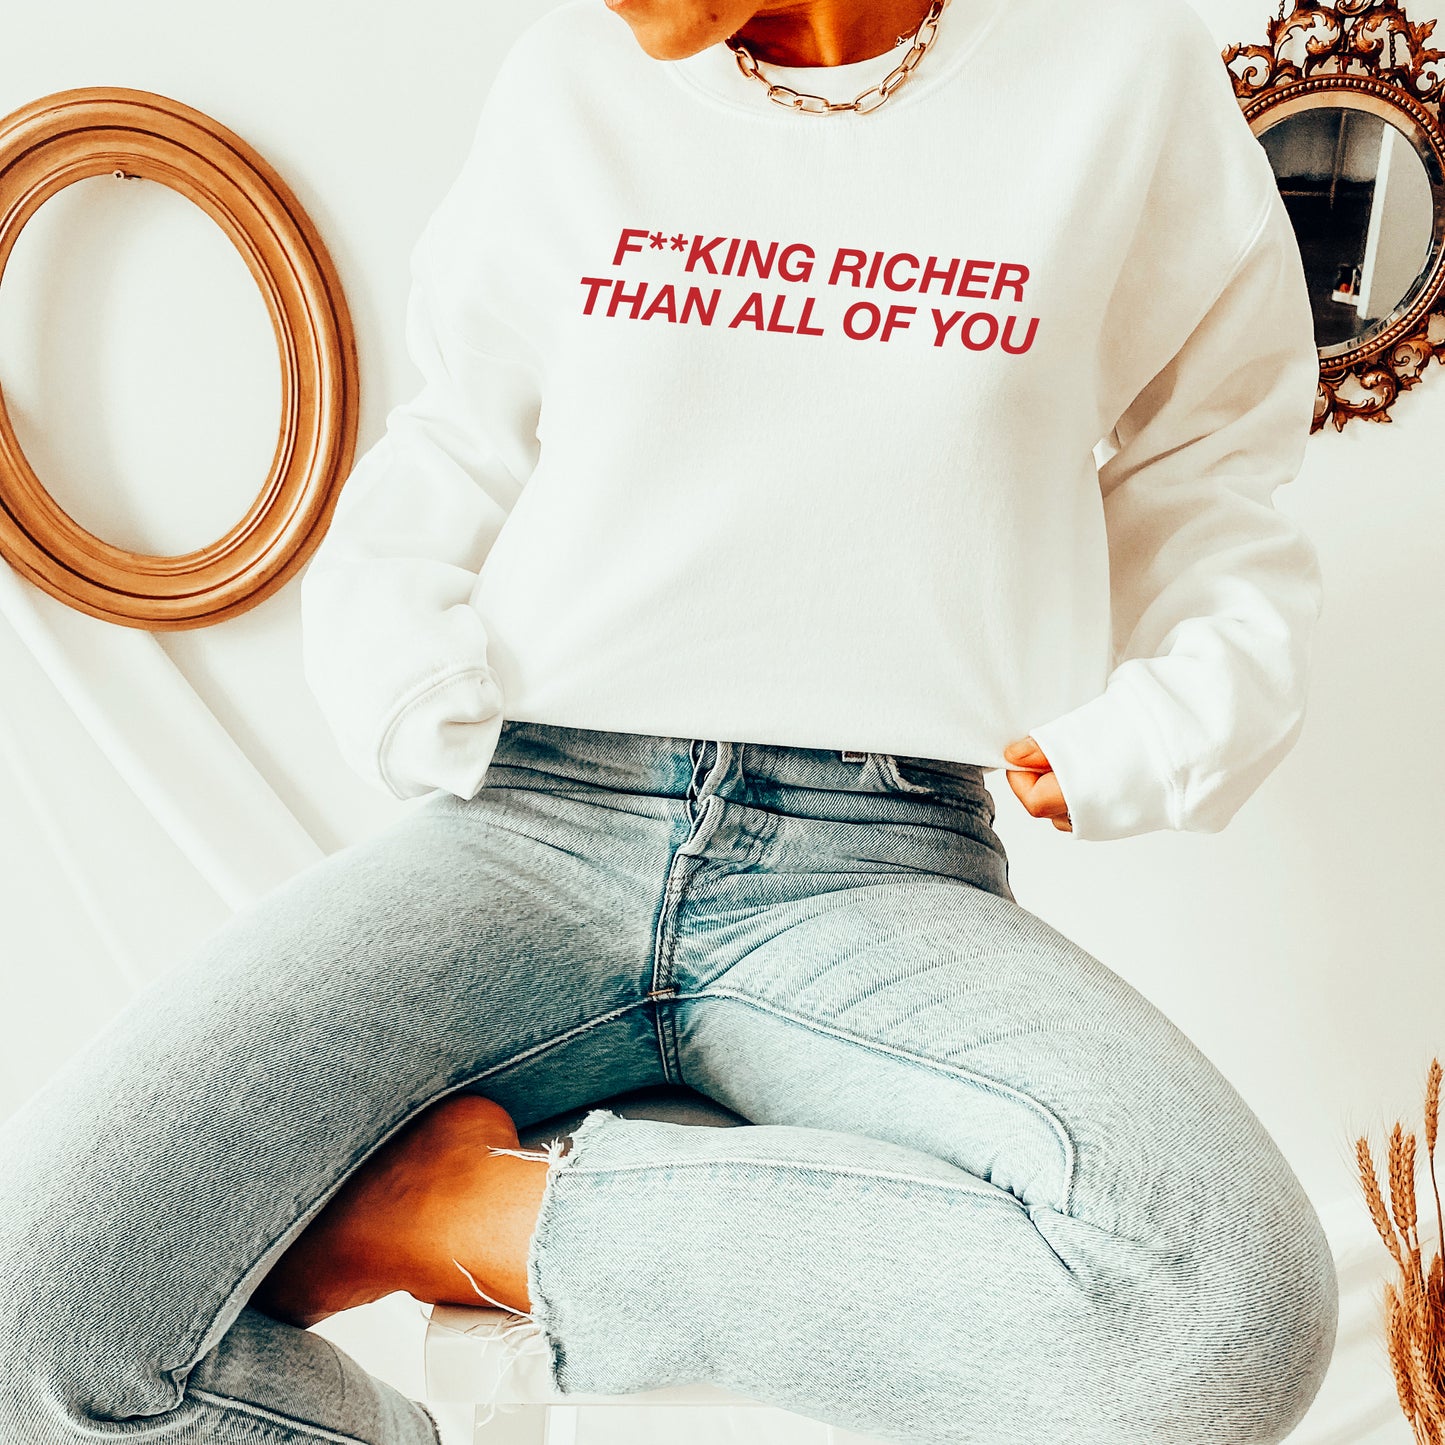 F**cking Richer Than All Of You | RHOSLC Sweatshirt